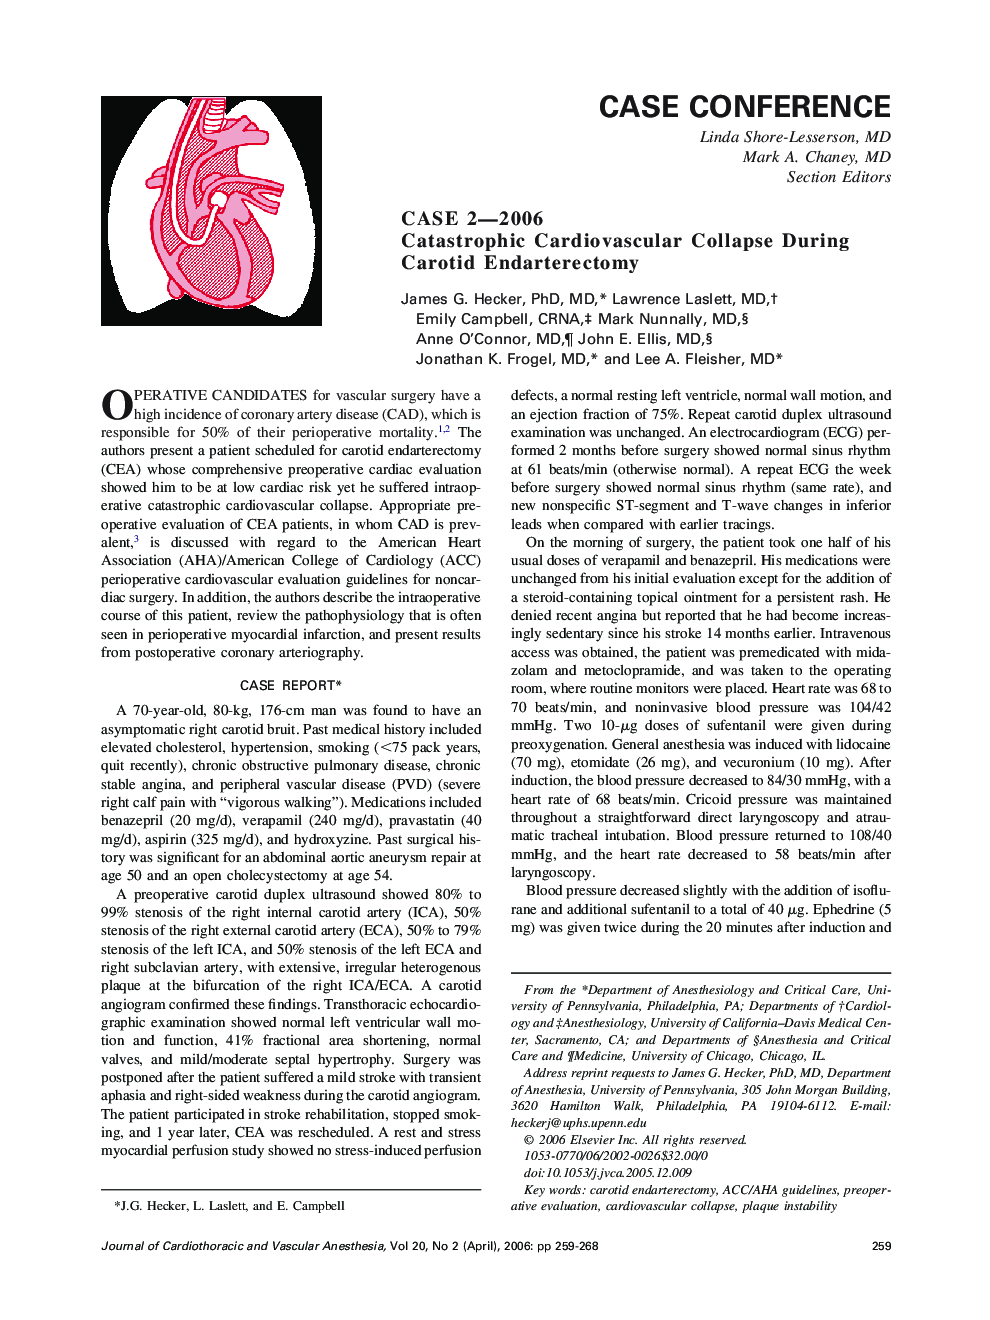 Case 2-2006Catastrophic Cardiovascular Collapse During Carotid Endarterectomy